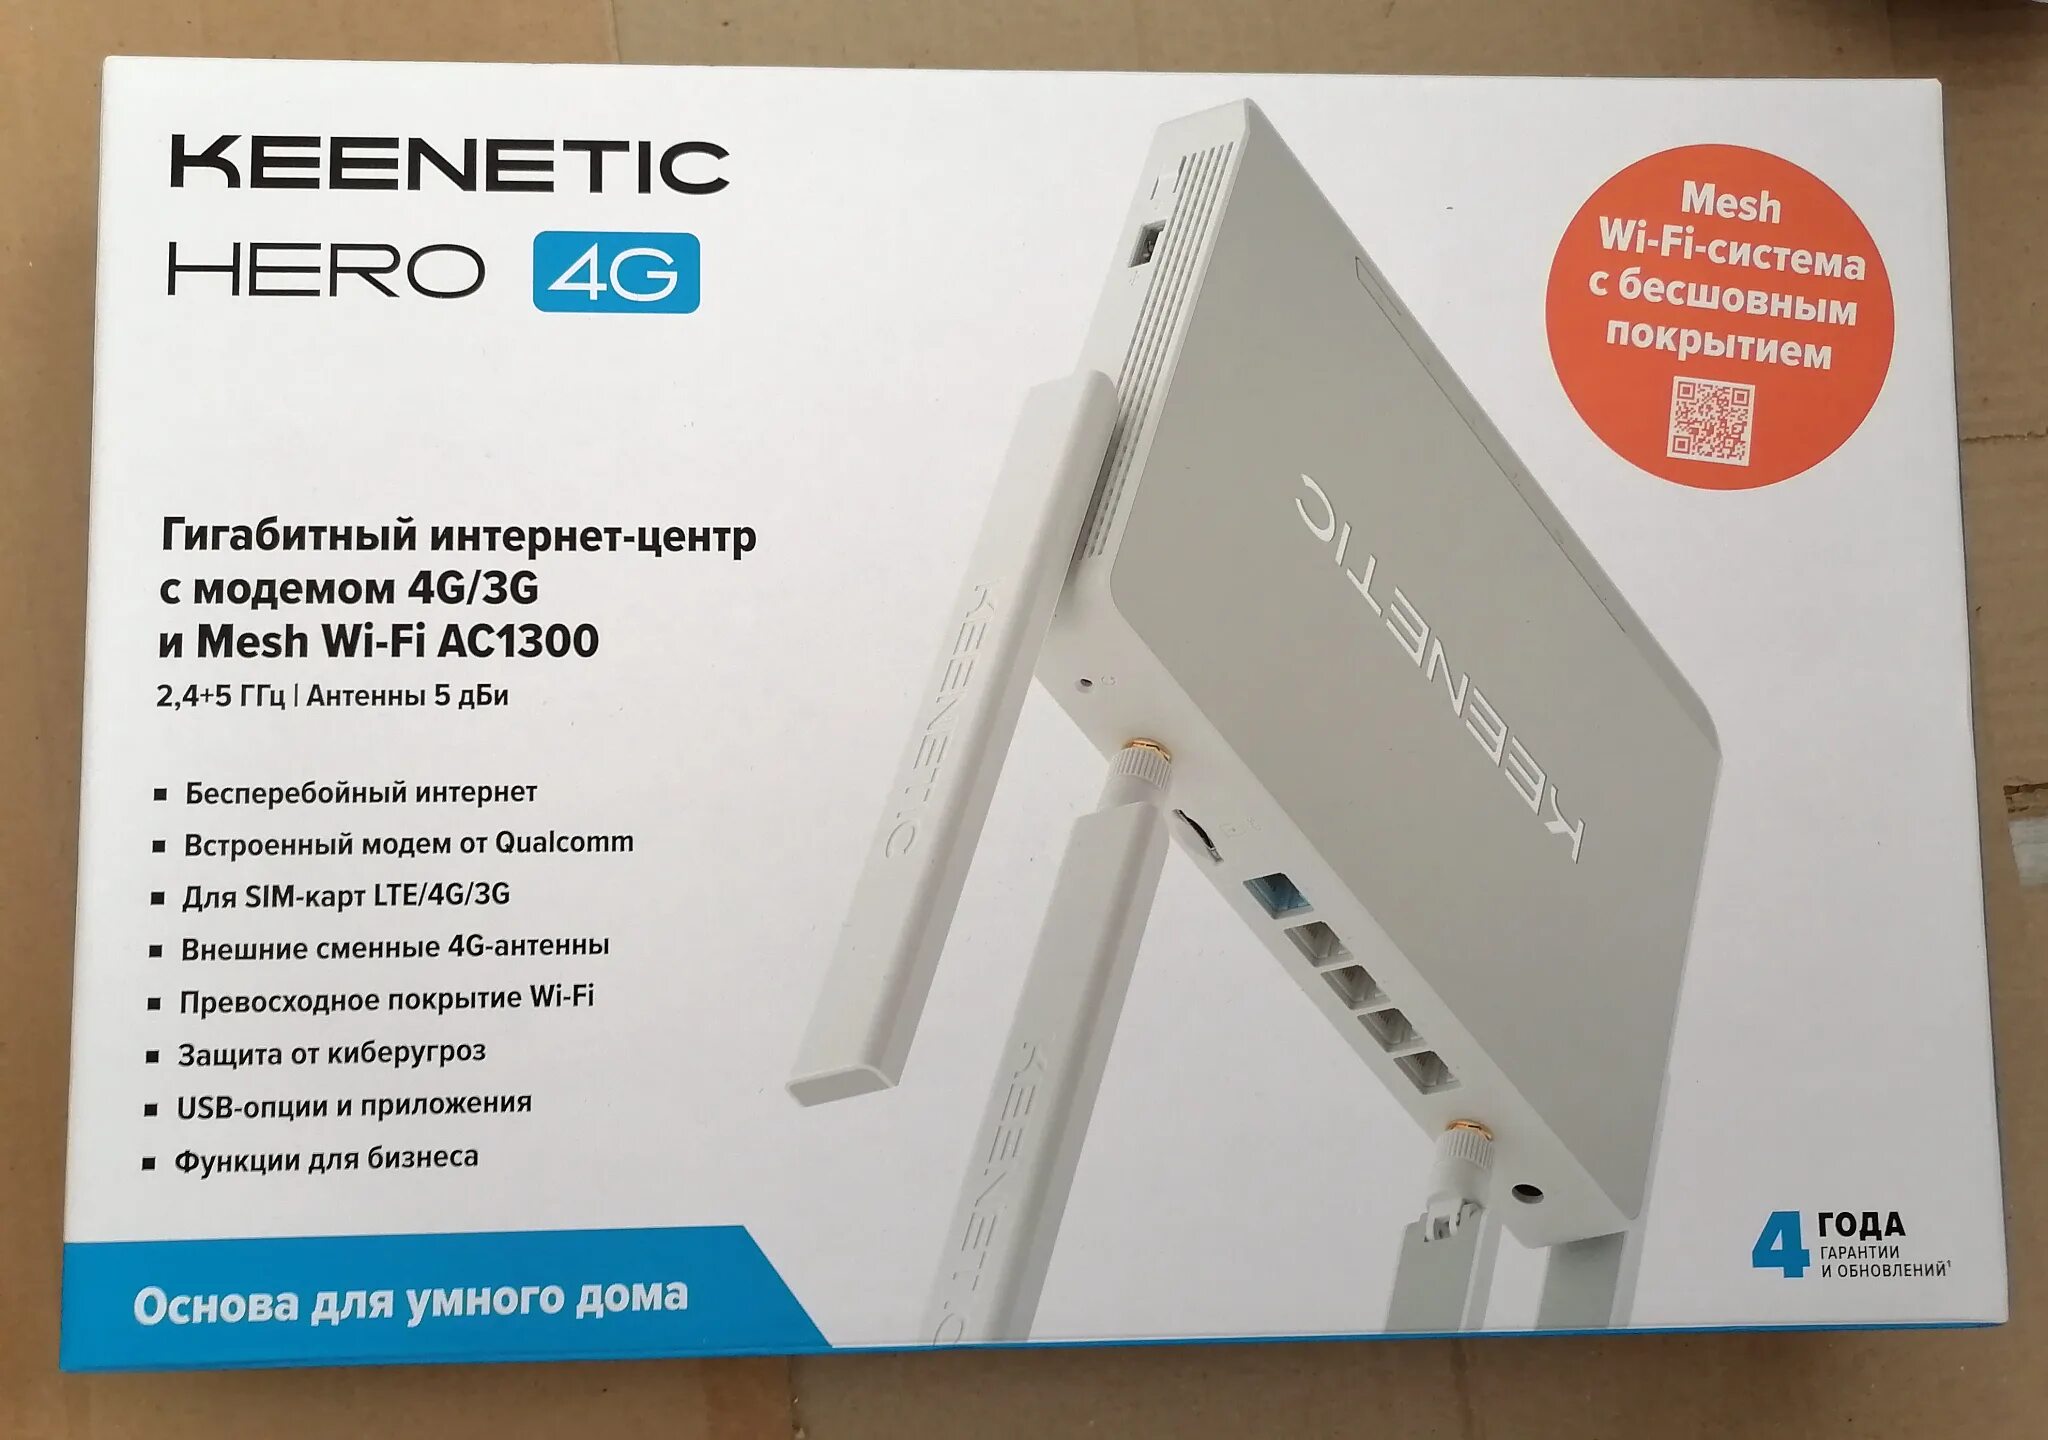 Hero 4g kn 2310. Wi-Fi роутер Keenetic Hero 4g (KN-2310). Keenetic Hero 4g. Keenetic Hero 4g коробка. Keenetic 4g KN-1212.